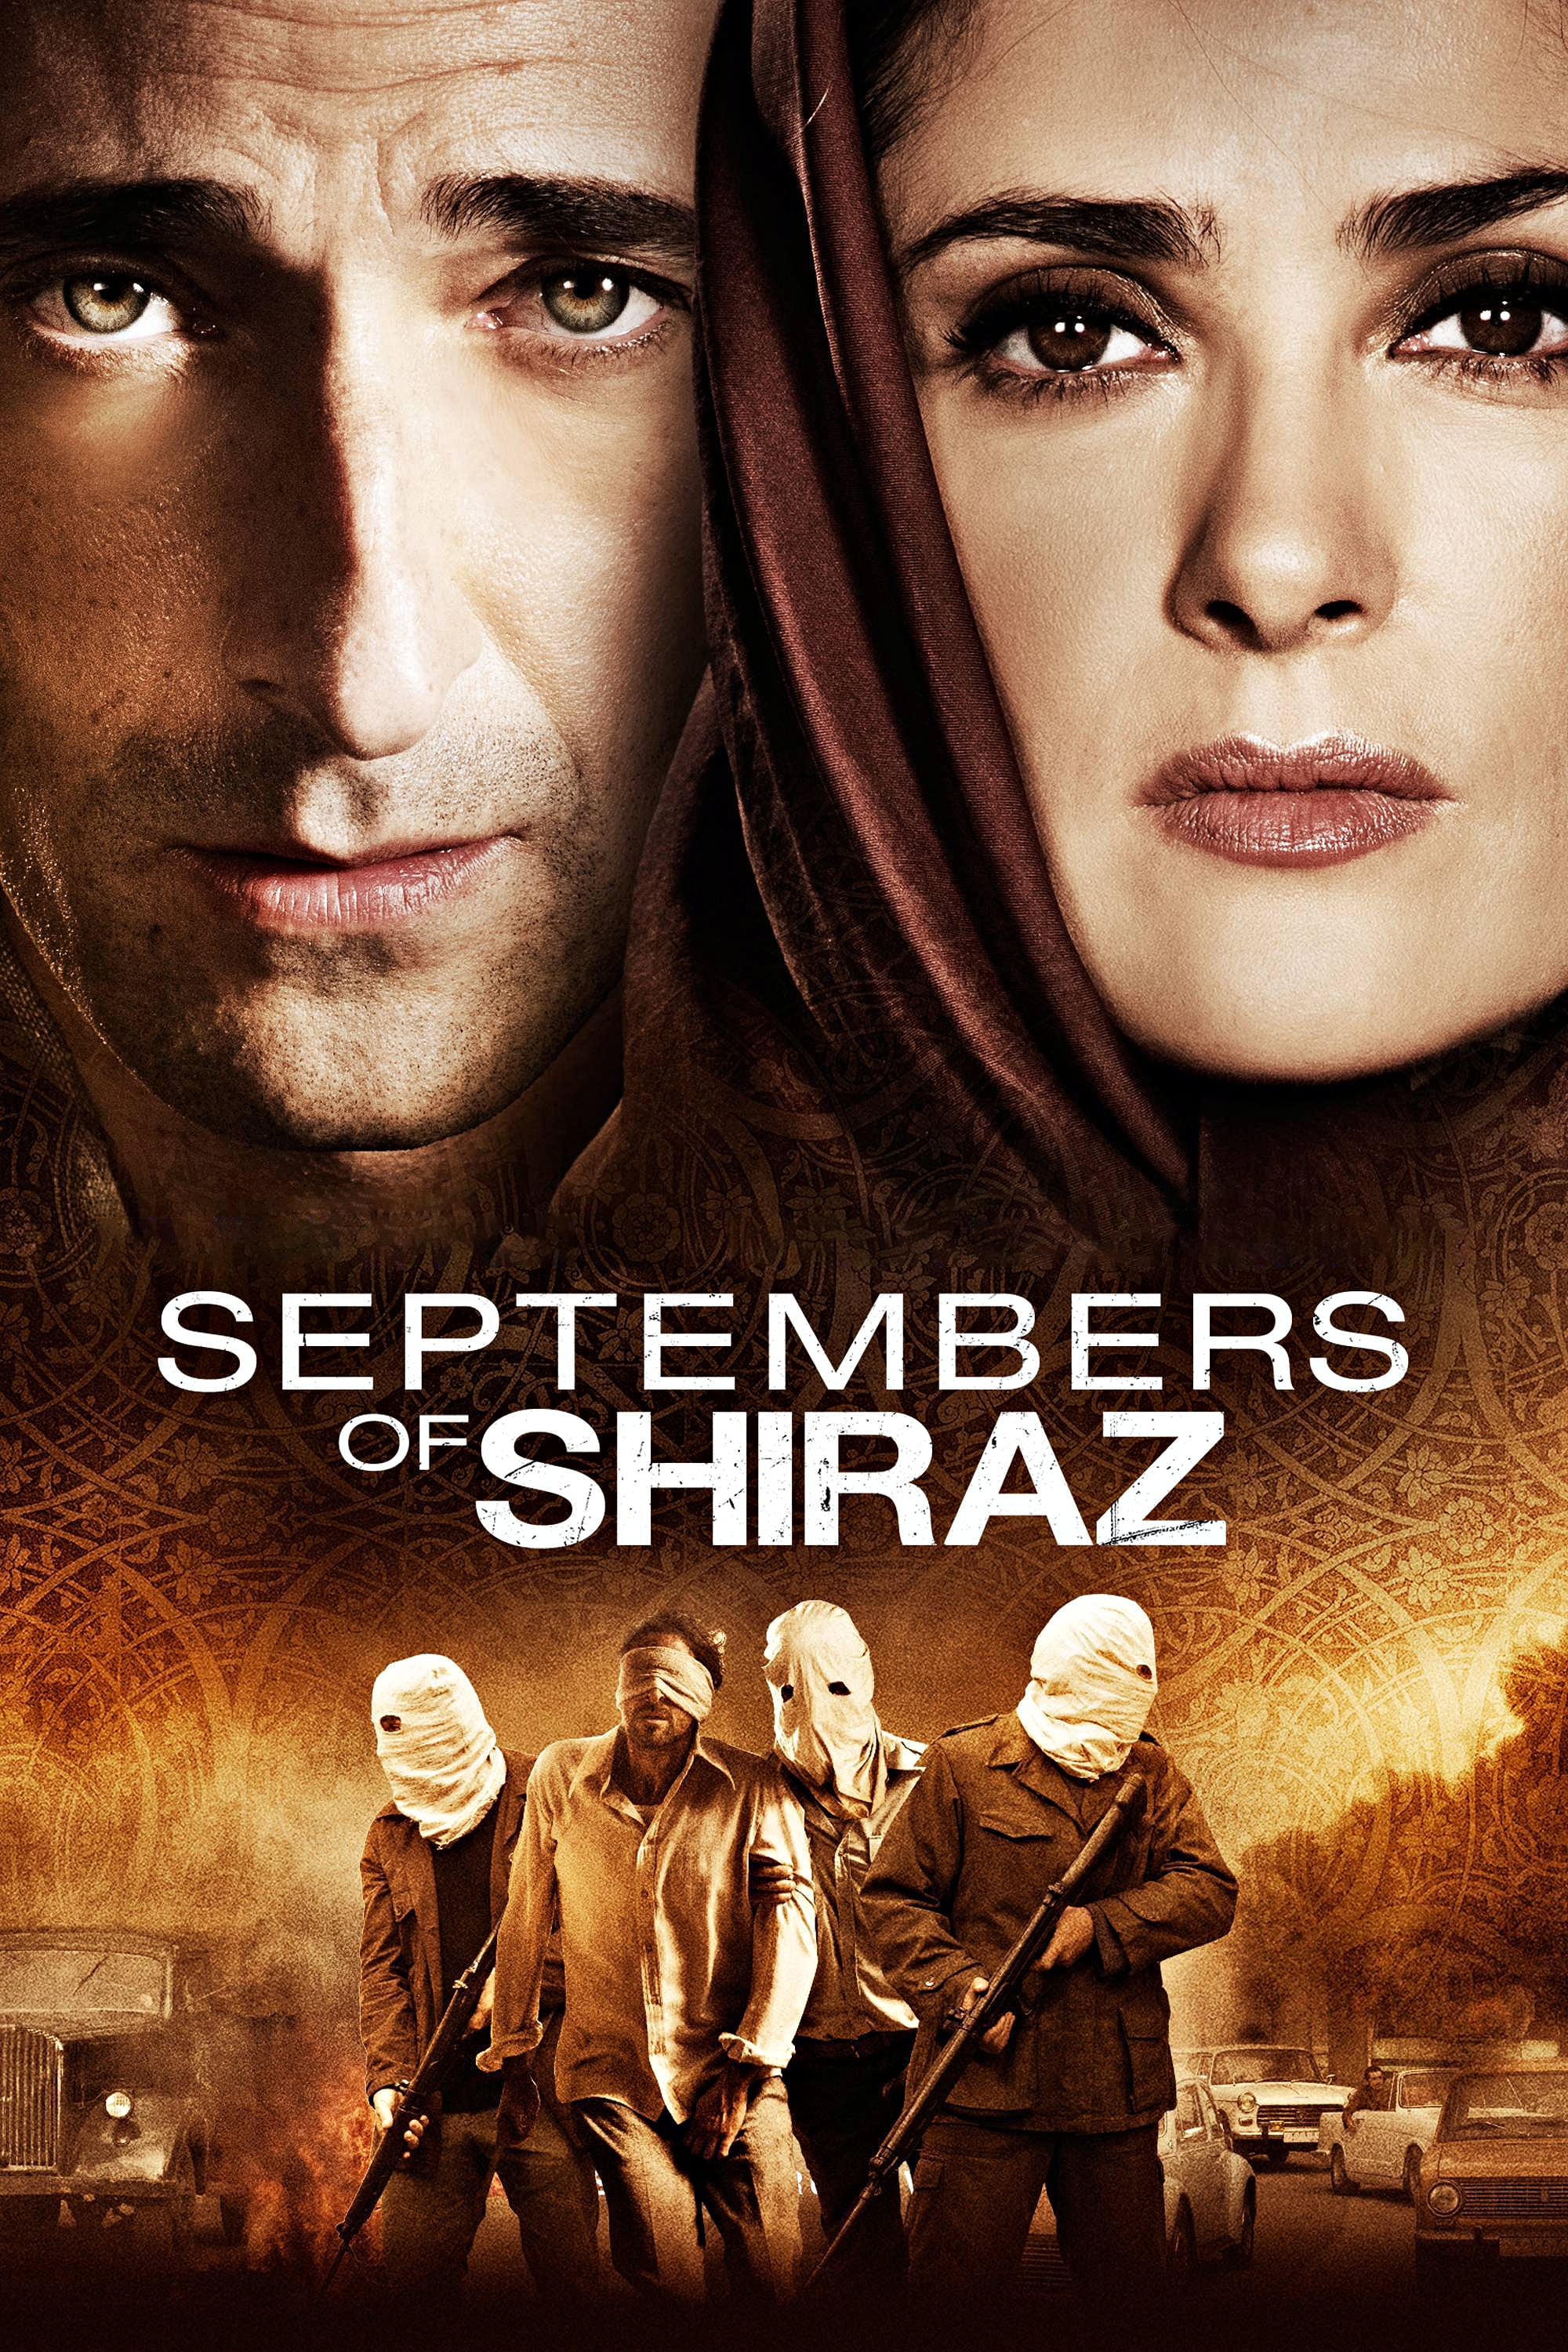 Plakat von "Septembers of Shiraz"